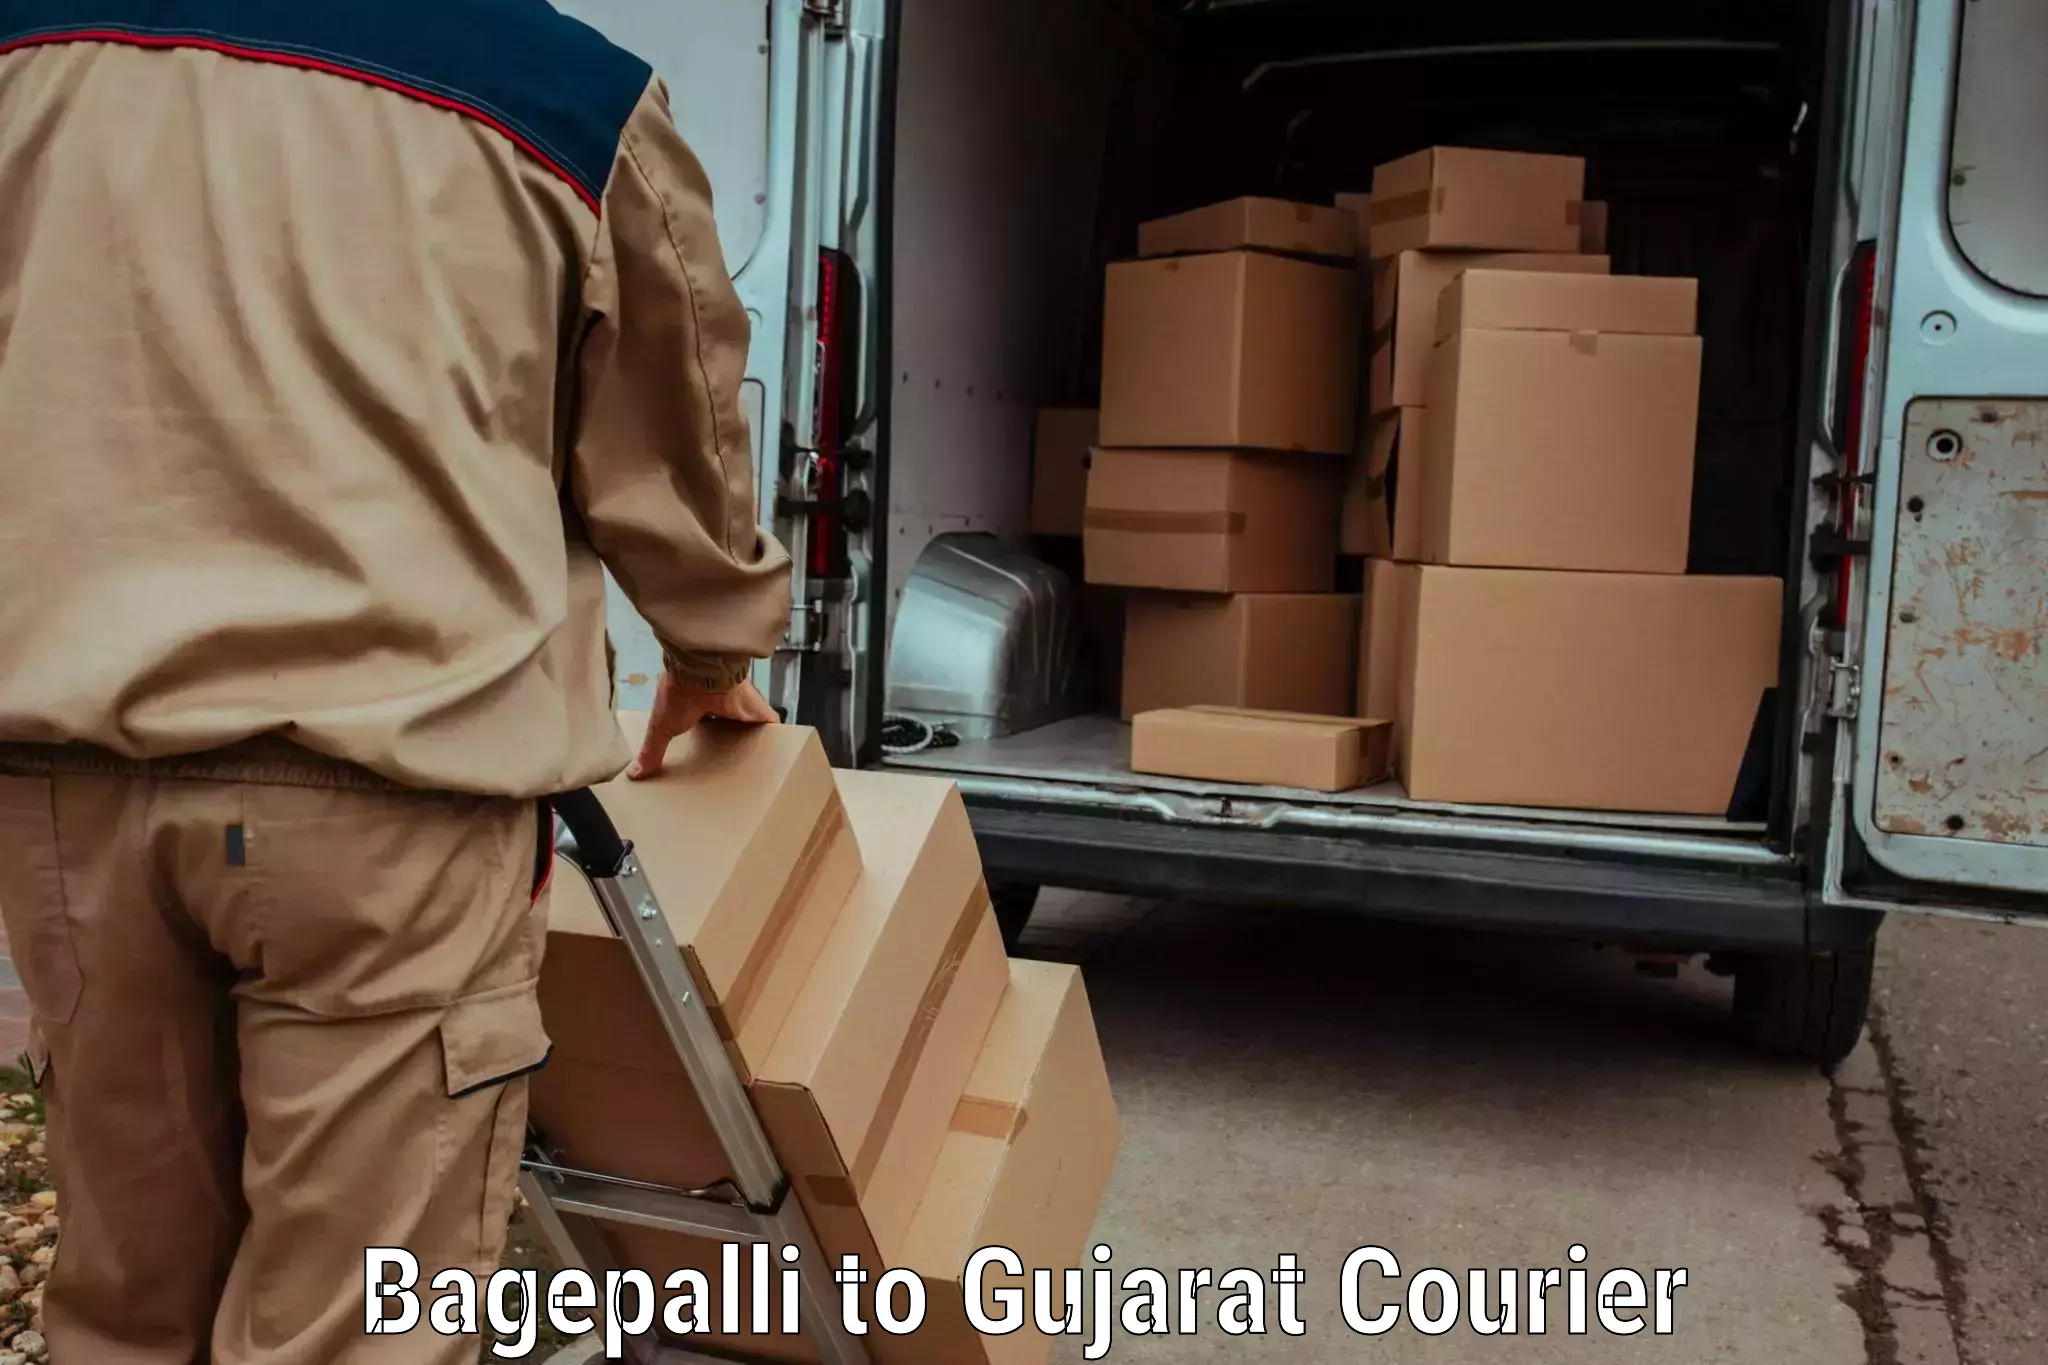 Quick dispatch service Bagepalli to Mehsana